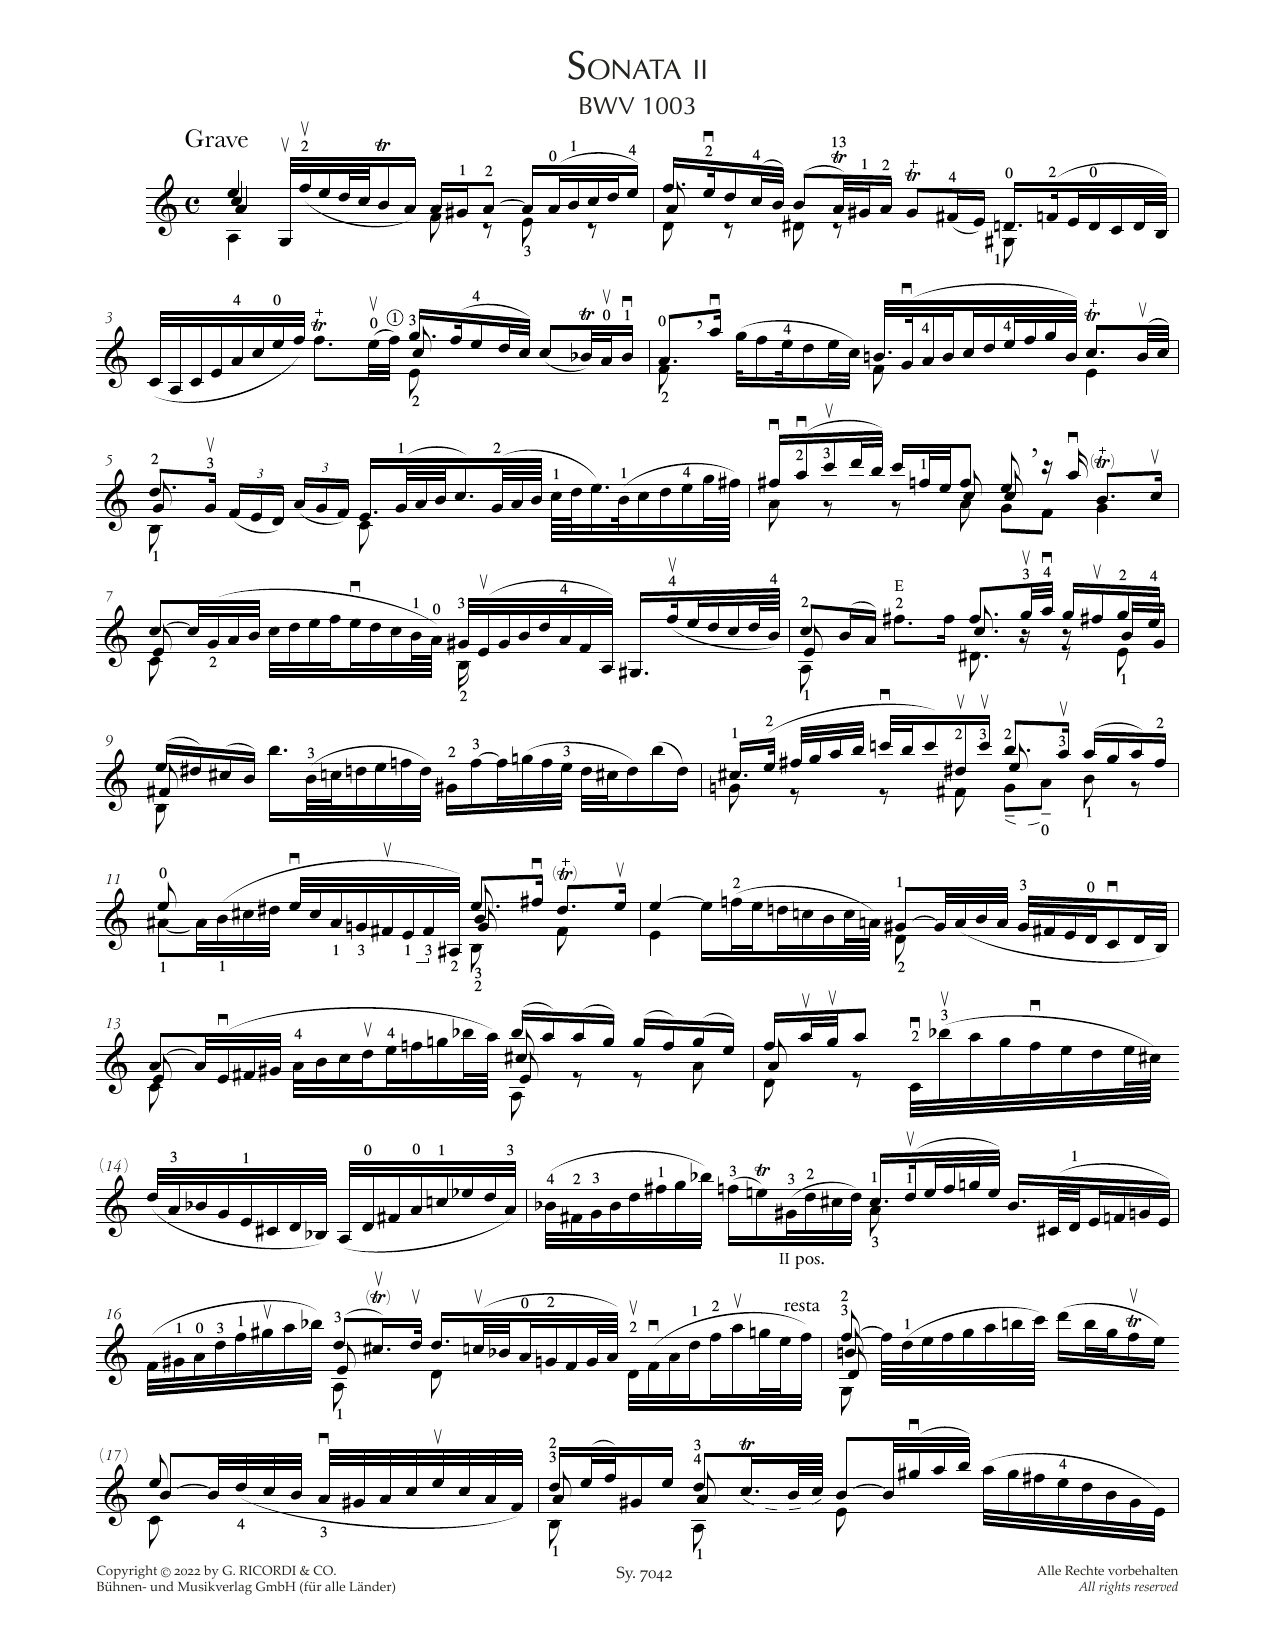 Johann Sebastian Bach Sonata II, BWV 1003 Sheet Music Notes & Chords for Violin Solo - Download or Print PDF